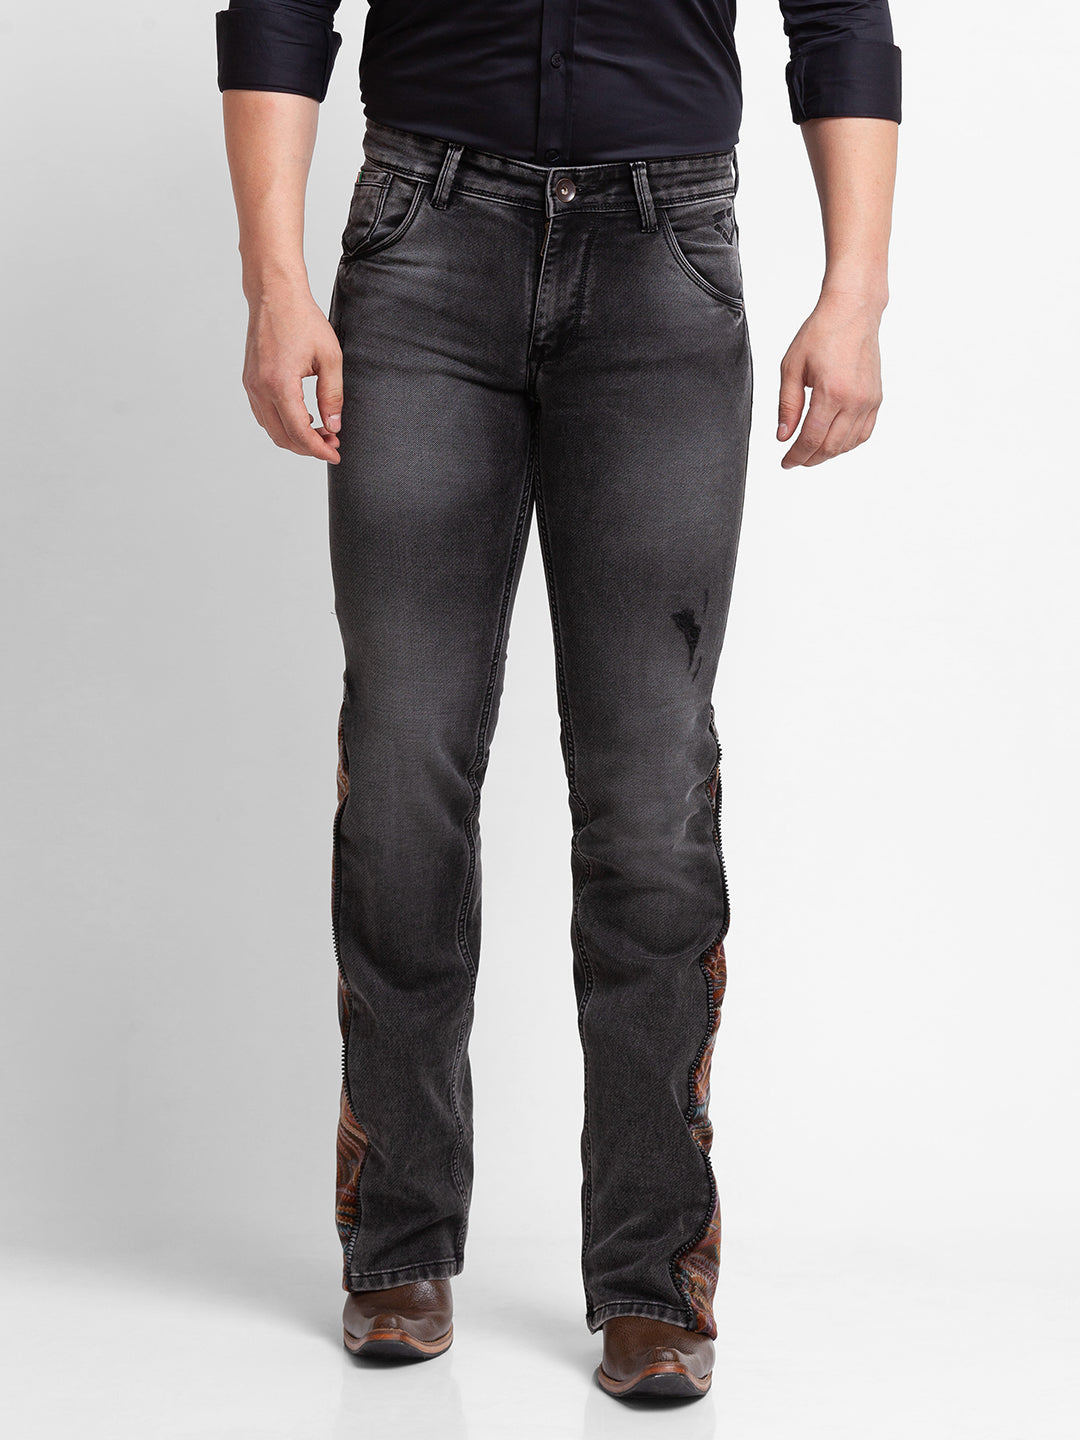 Carbon Black Zipper Bottom Bootcut Jeans